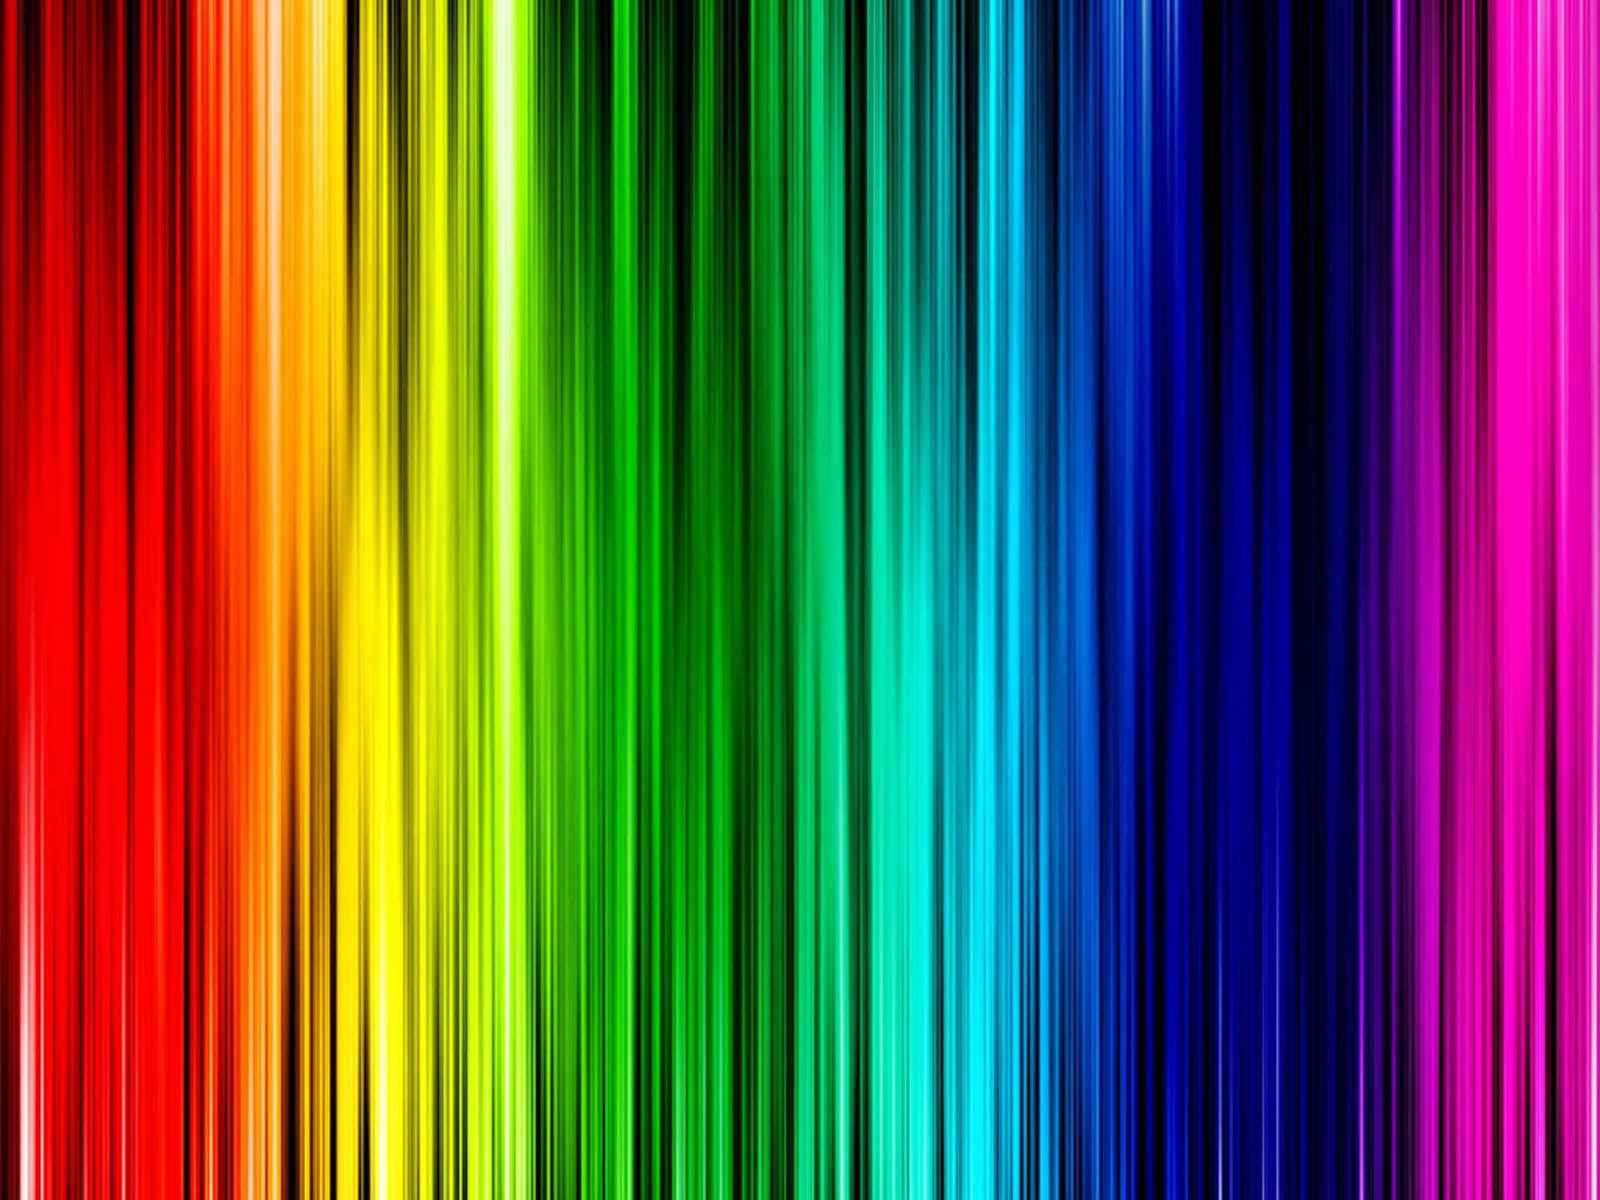  desktop wallpapers abstract rainbow colours desktop backgrounds images